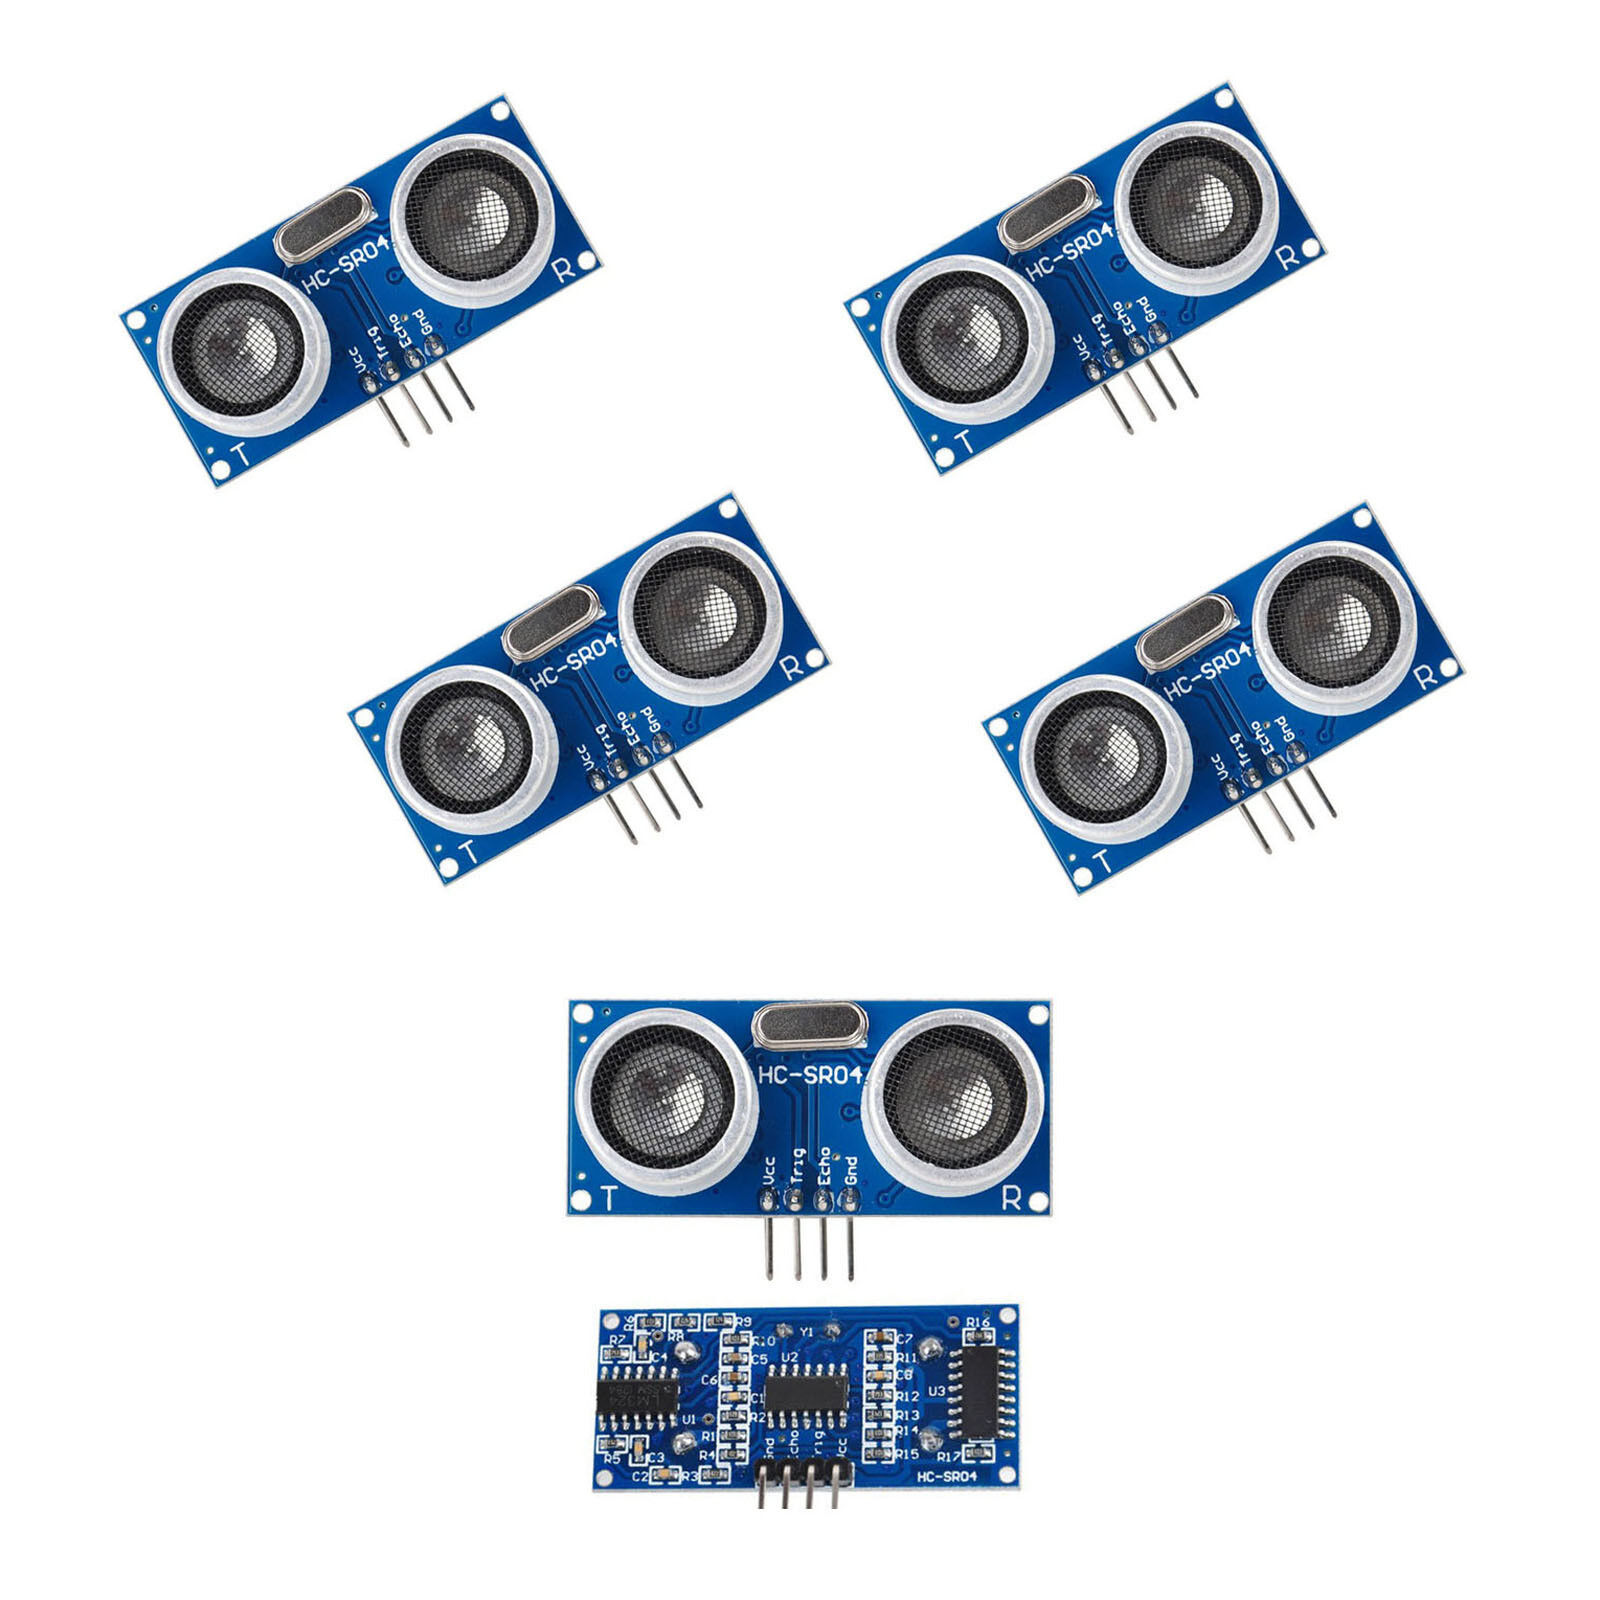 5pcs Ultrasonic Module HC-SR04 Distance Transducer Sensor for Arduino Robot